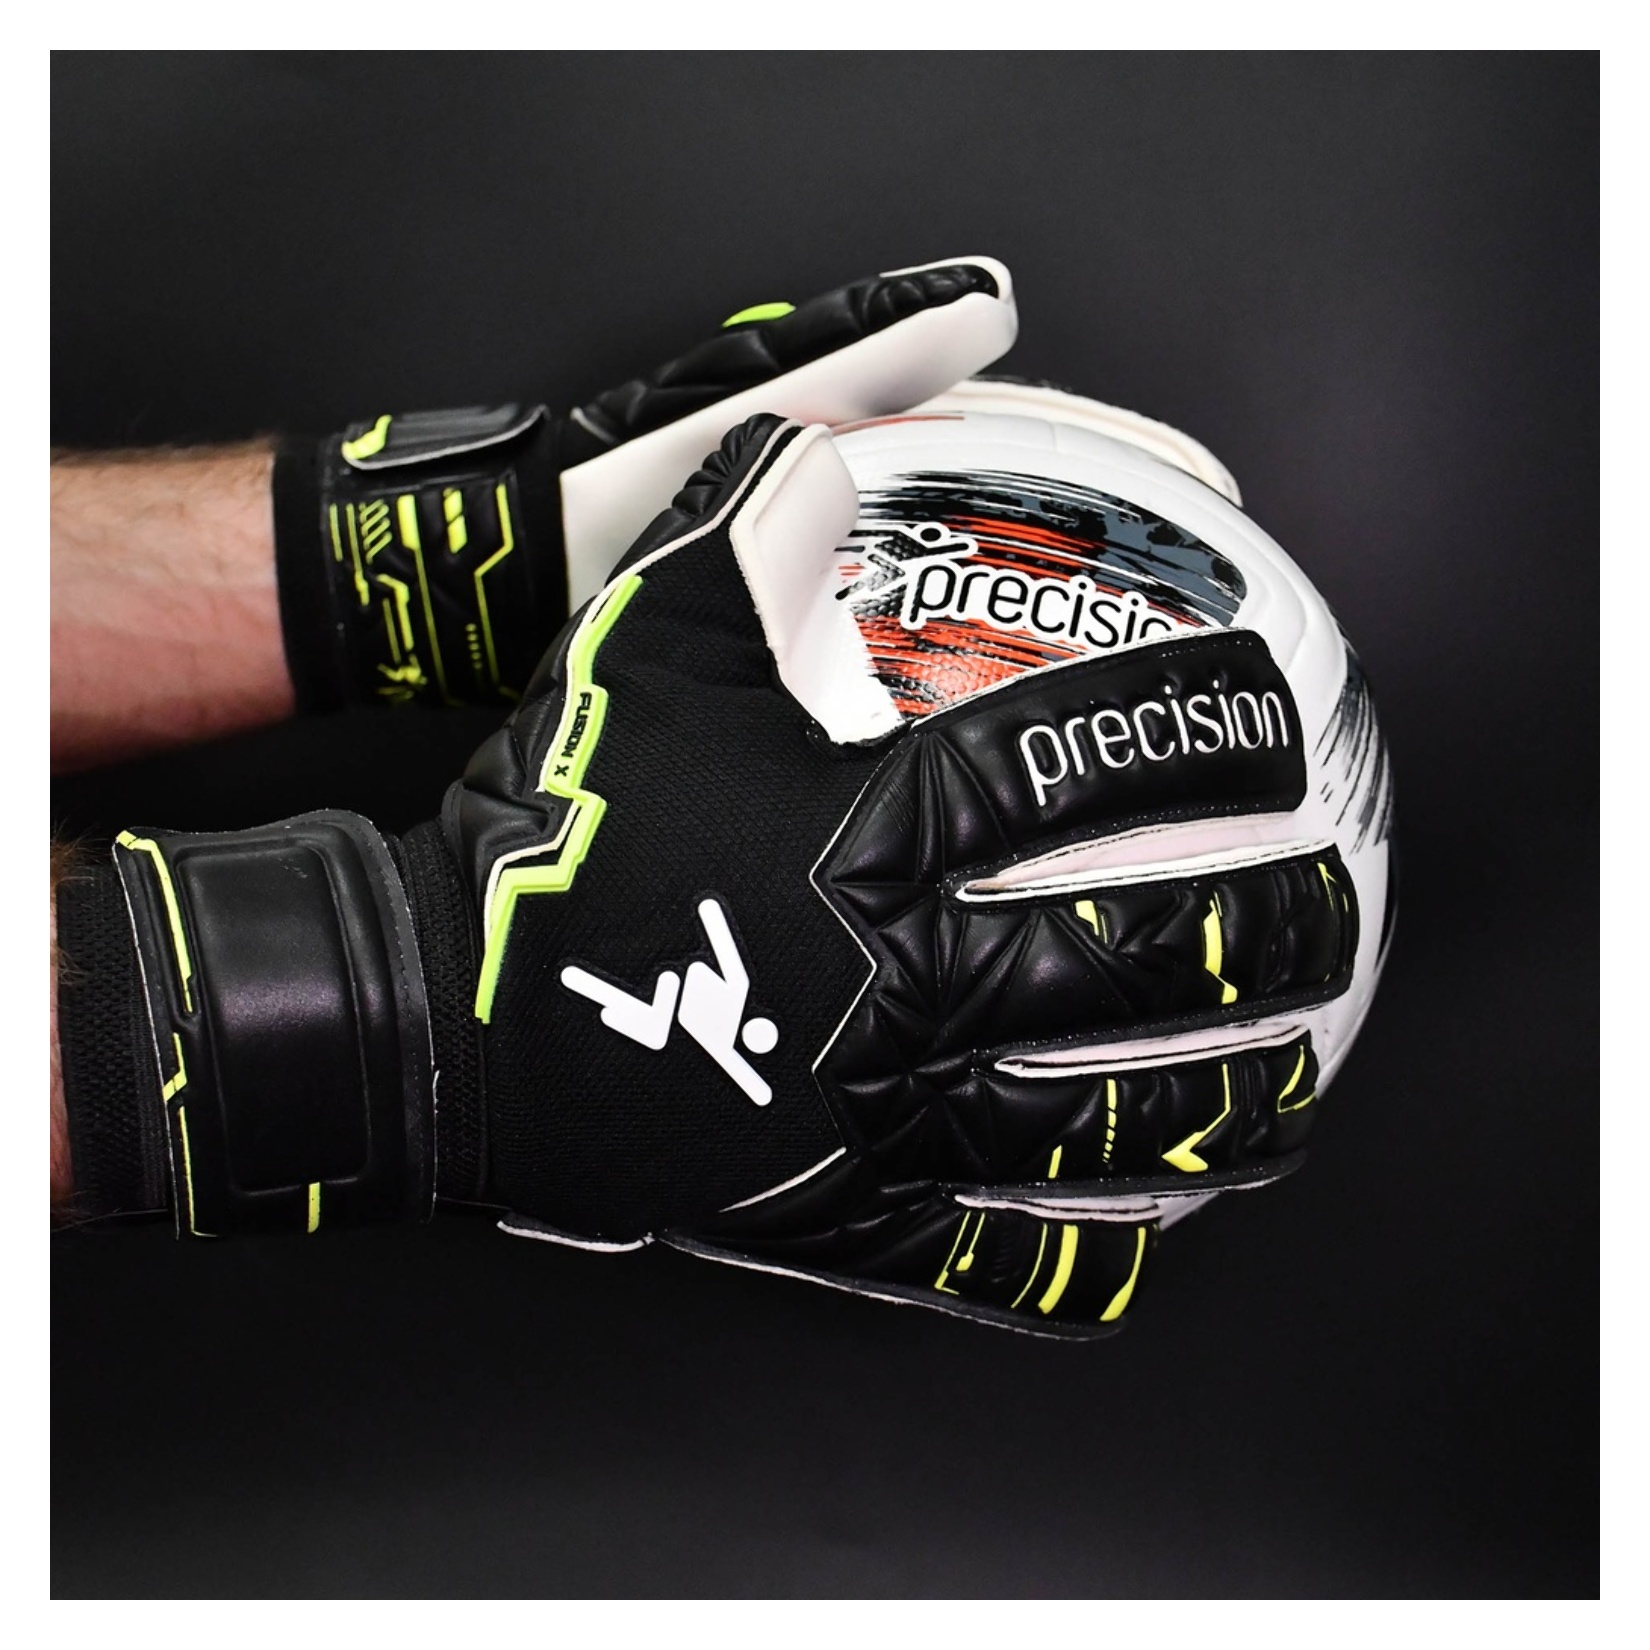 Precision Fusion X Pro Roll Finger Giga GK Gloves